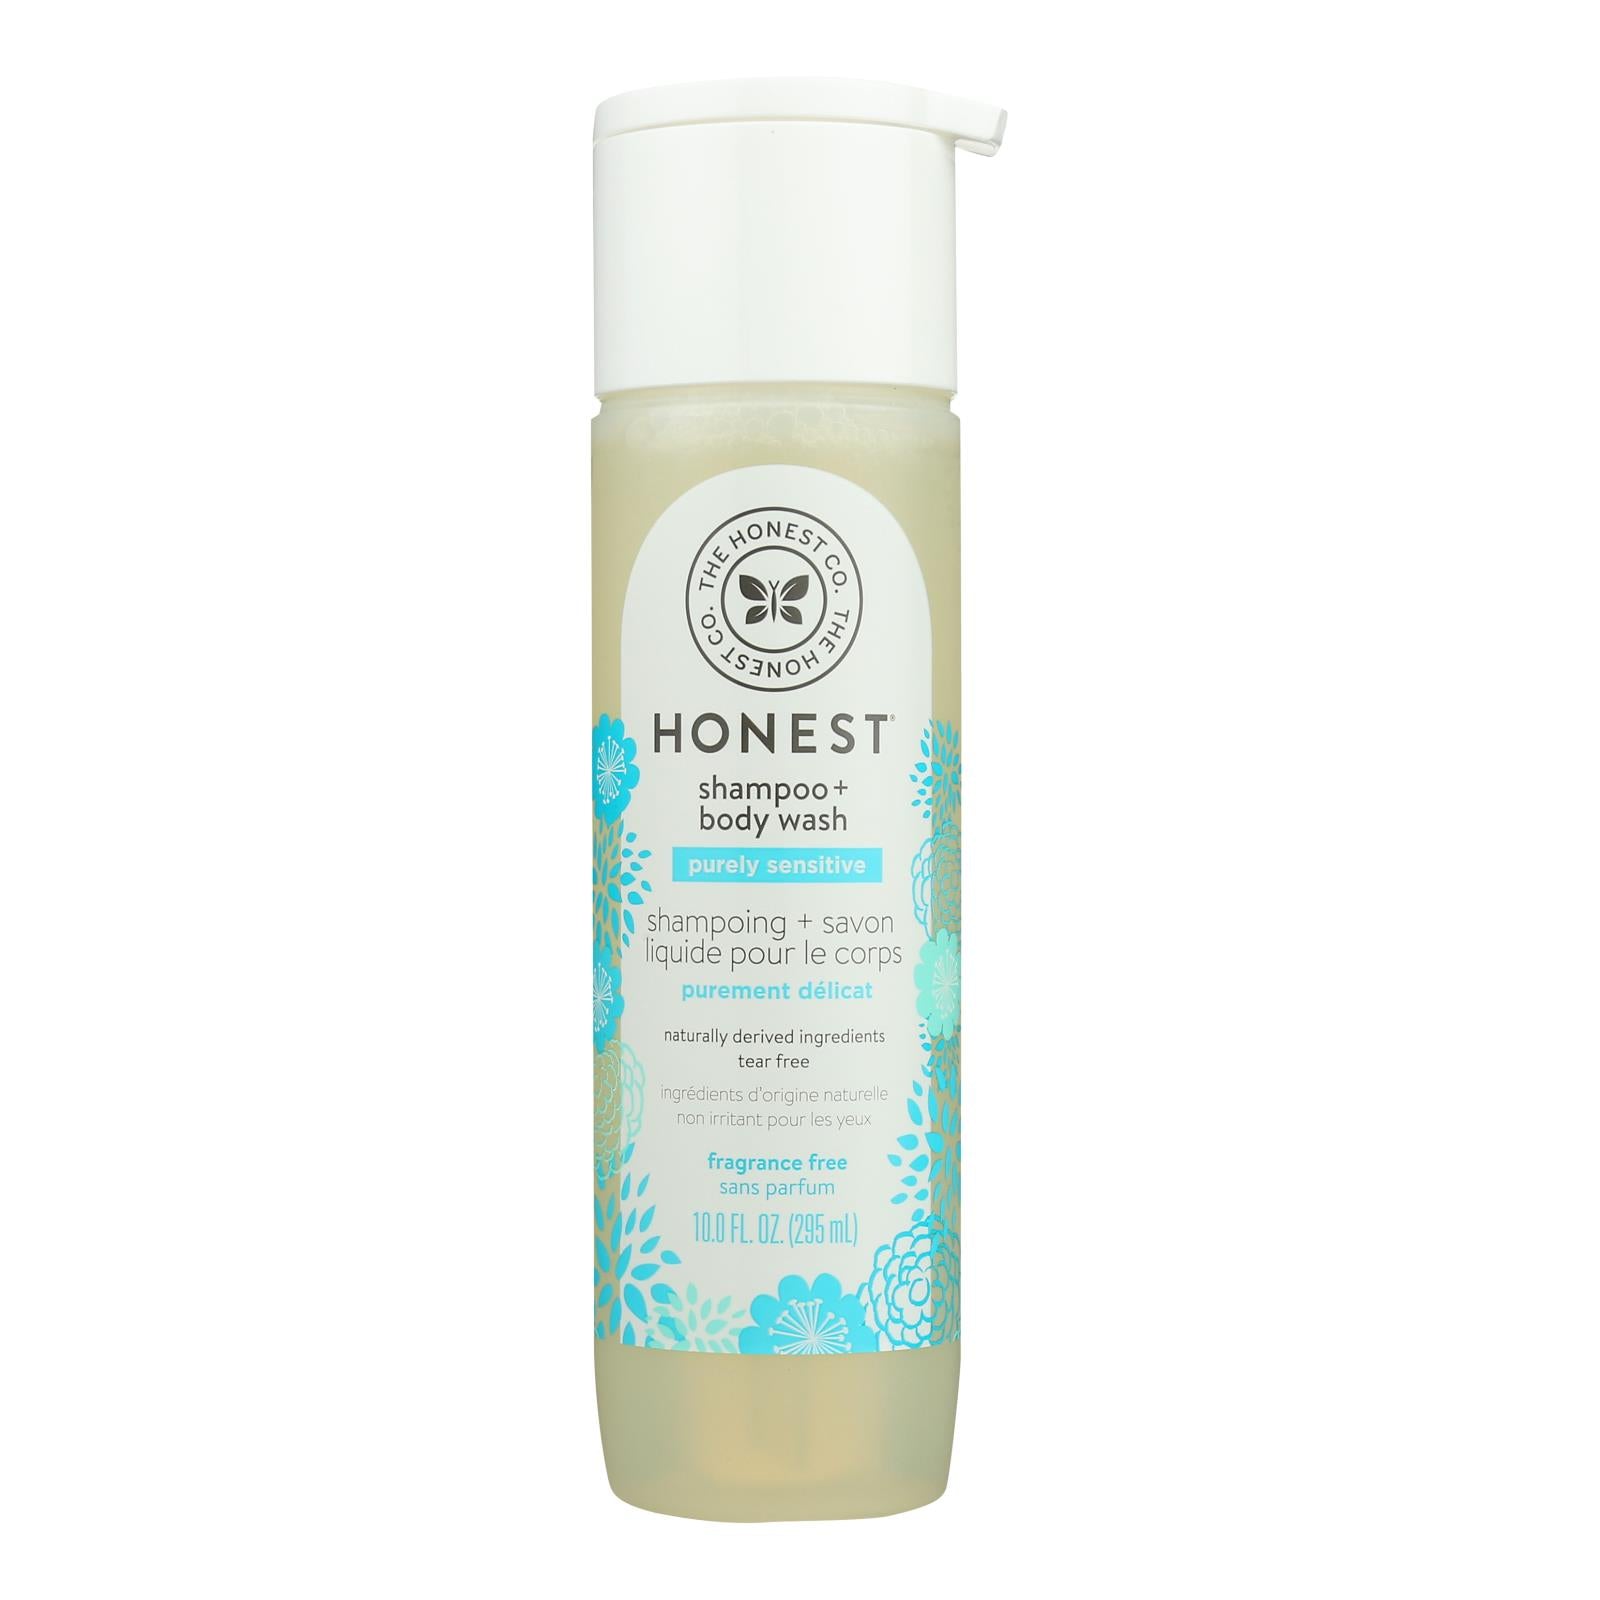 The Honest Company Fragrance Free Shampoo & Body Wash  - 1 Each - 10 FZ